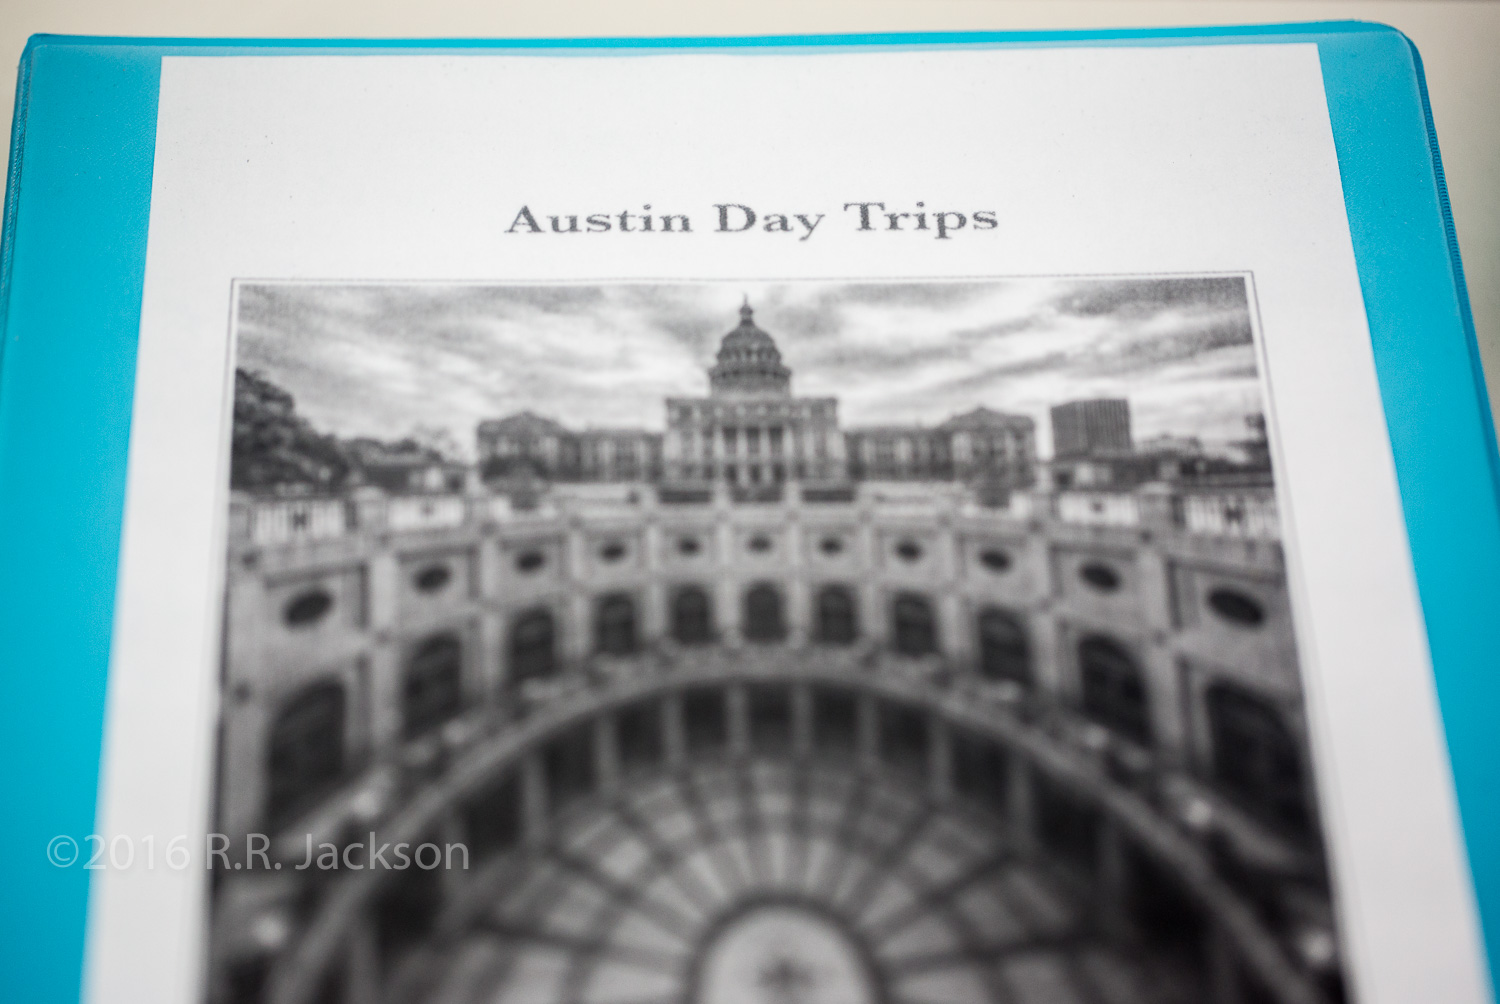 Austin Day Trips - Near and Far